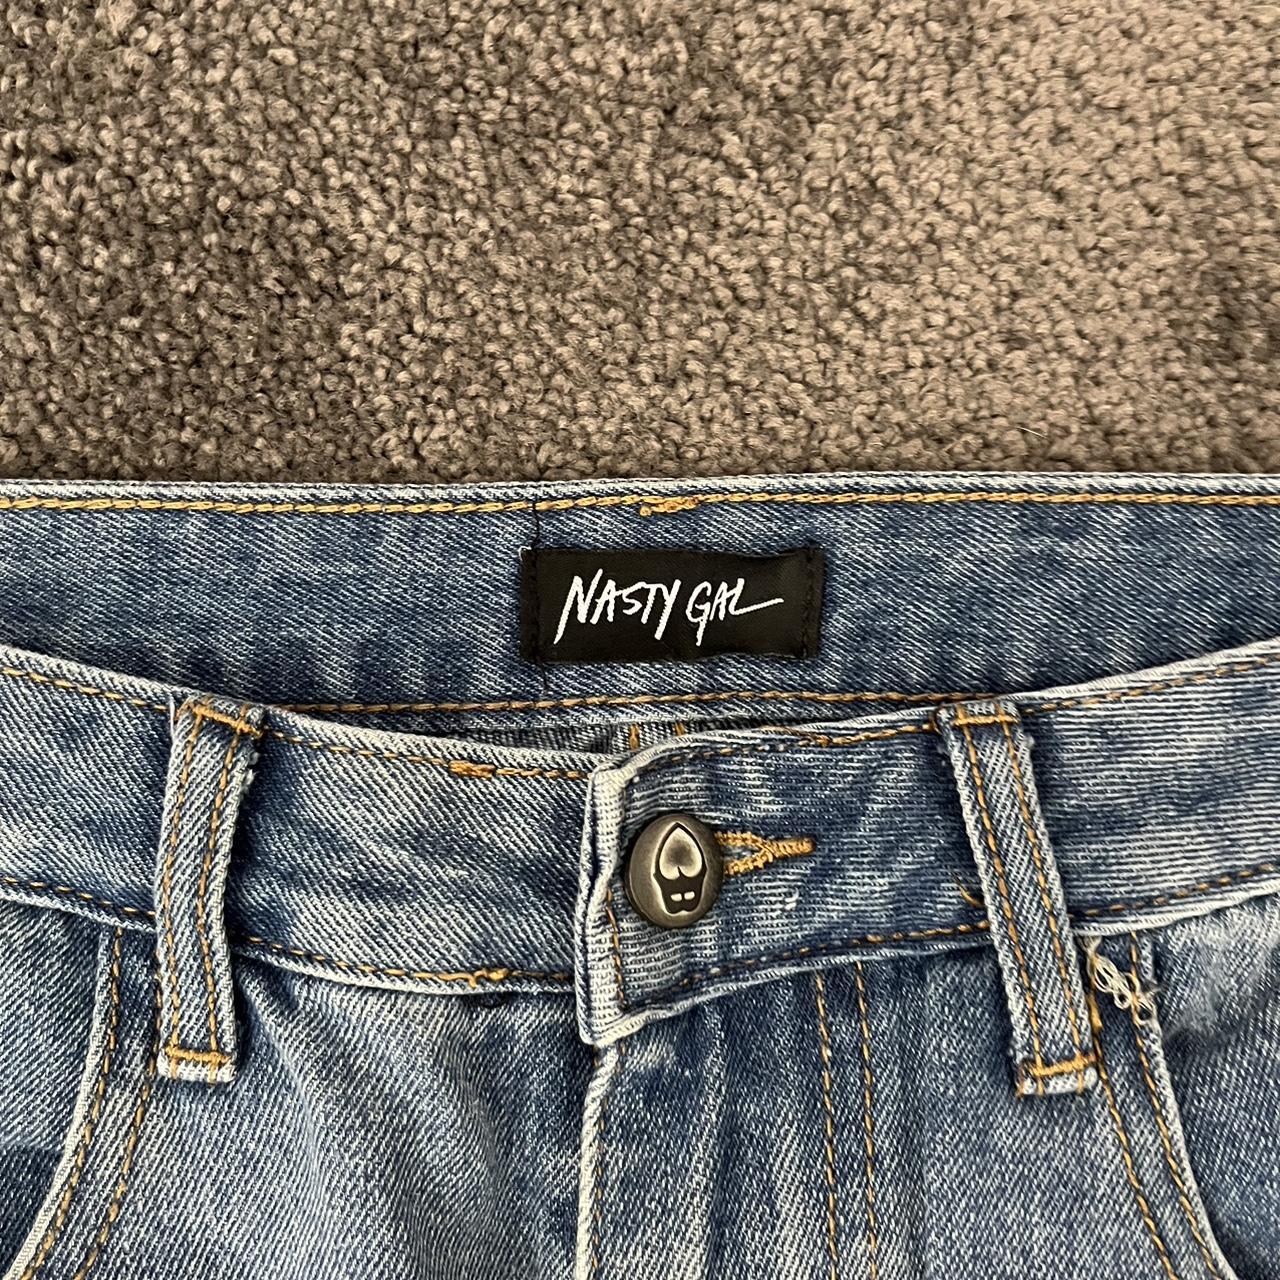 NASTY GAL denim jeans - Depop